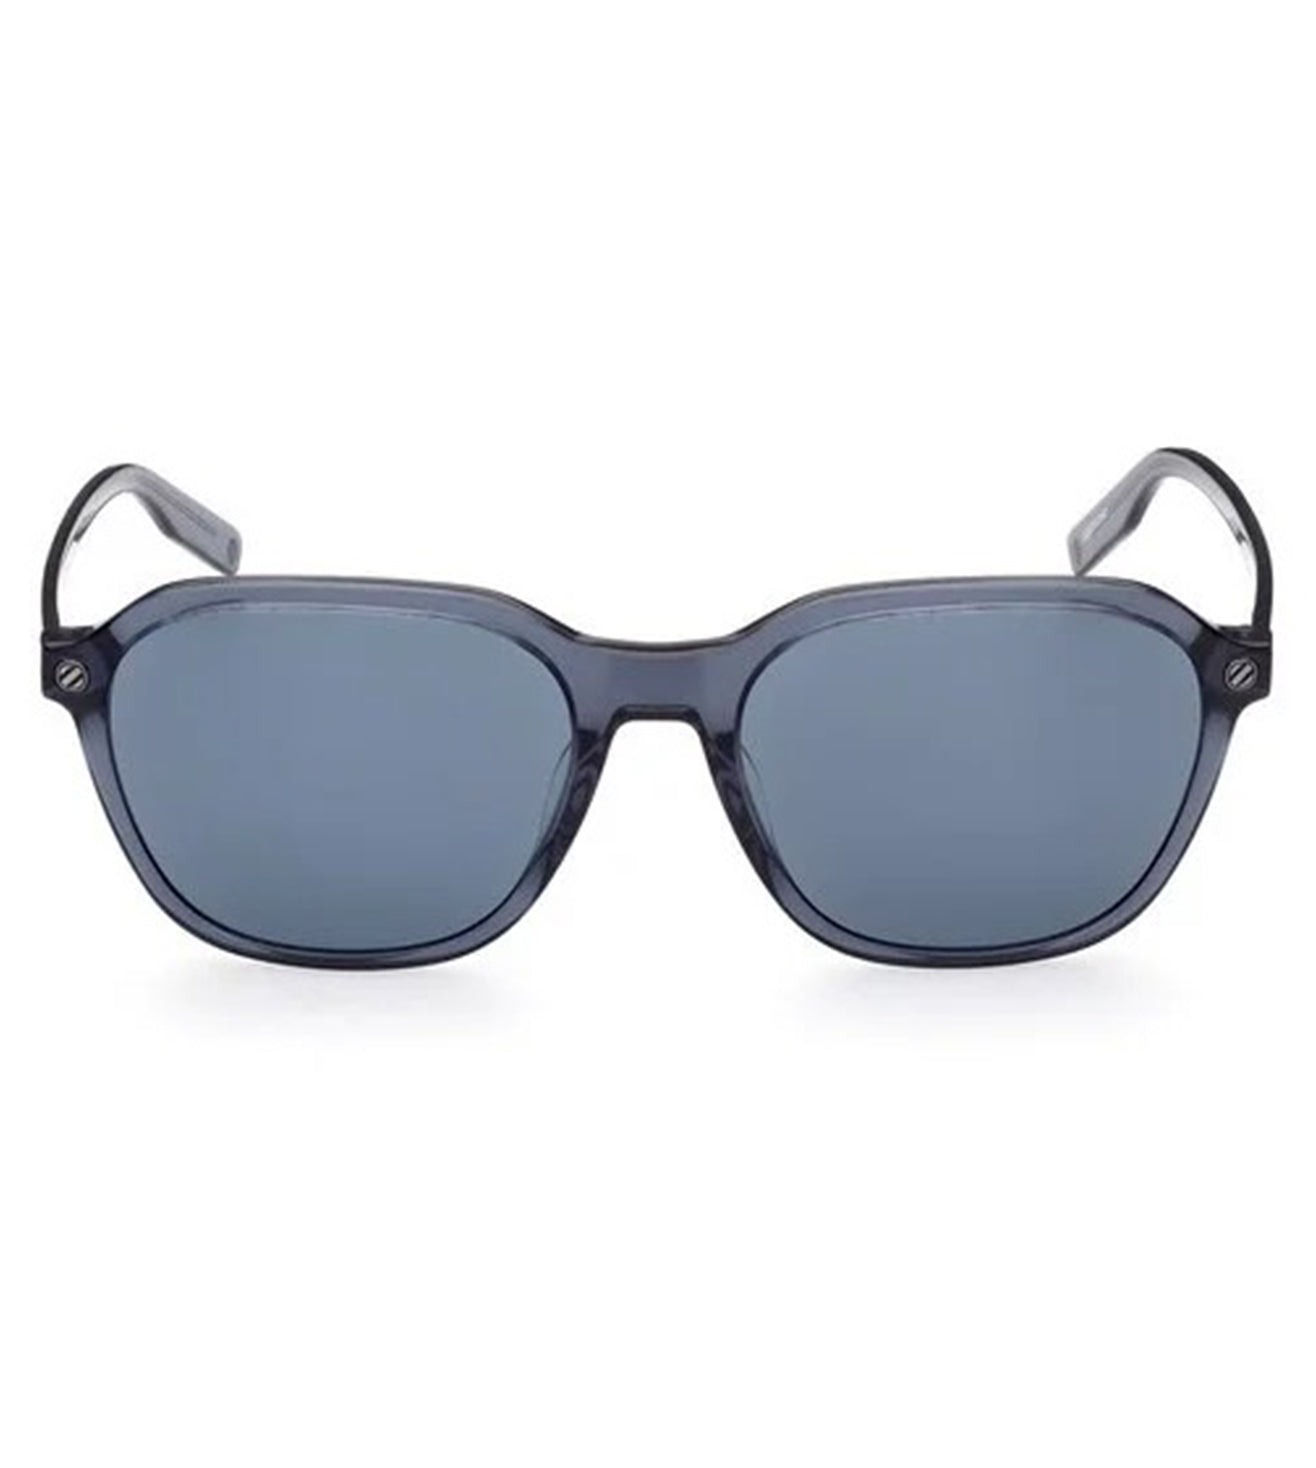 Zegna Men's Blue Square Sunglasses